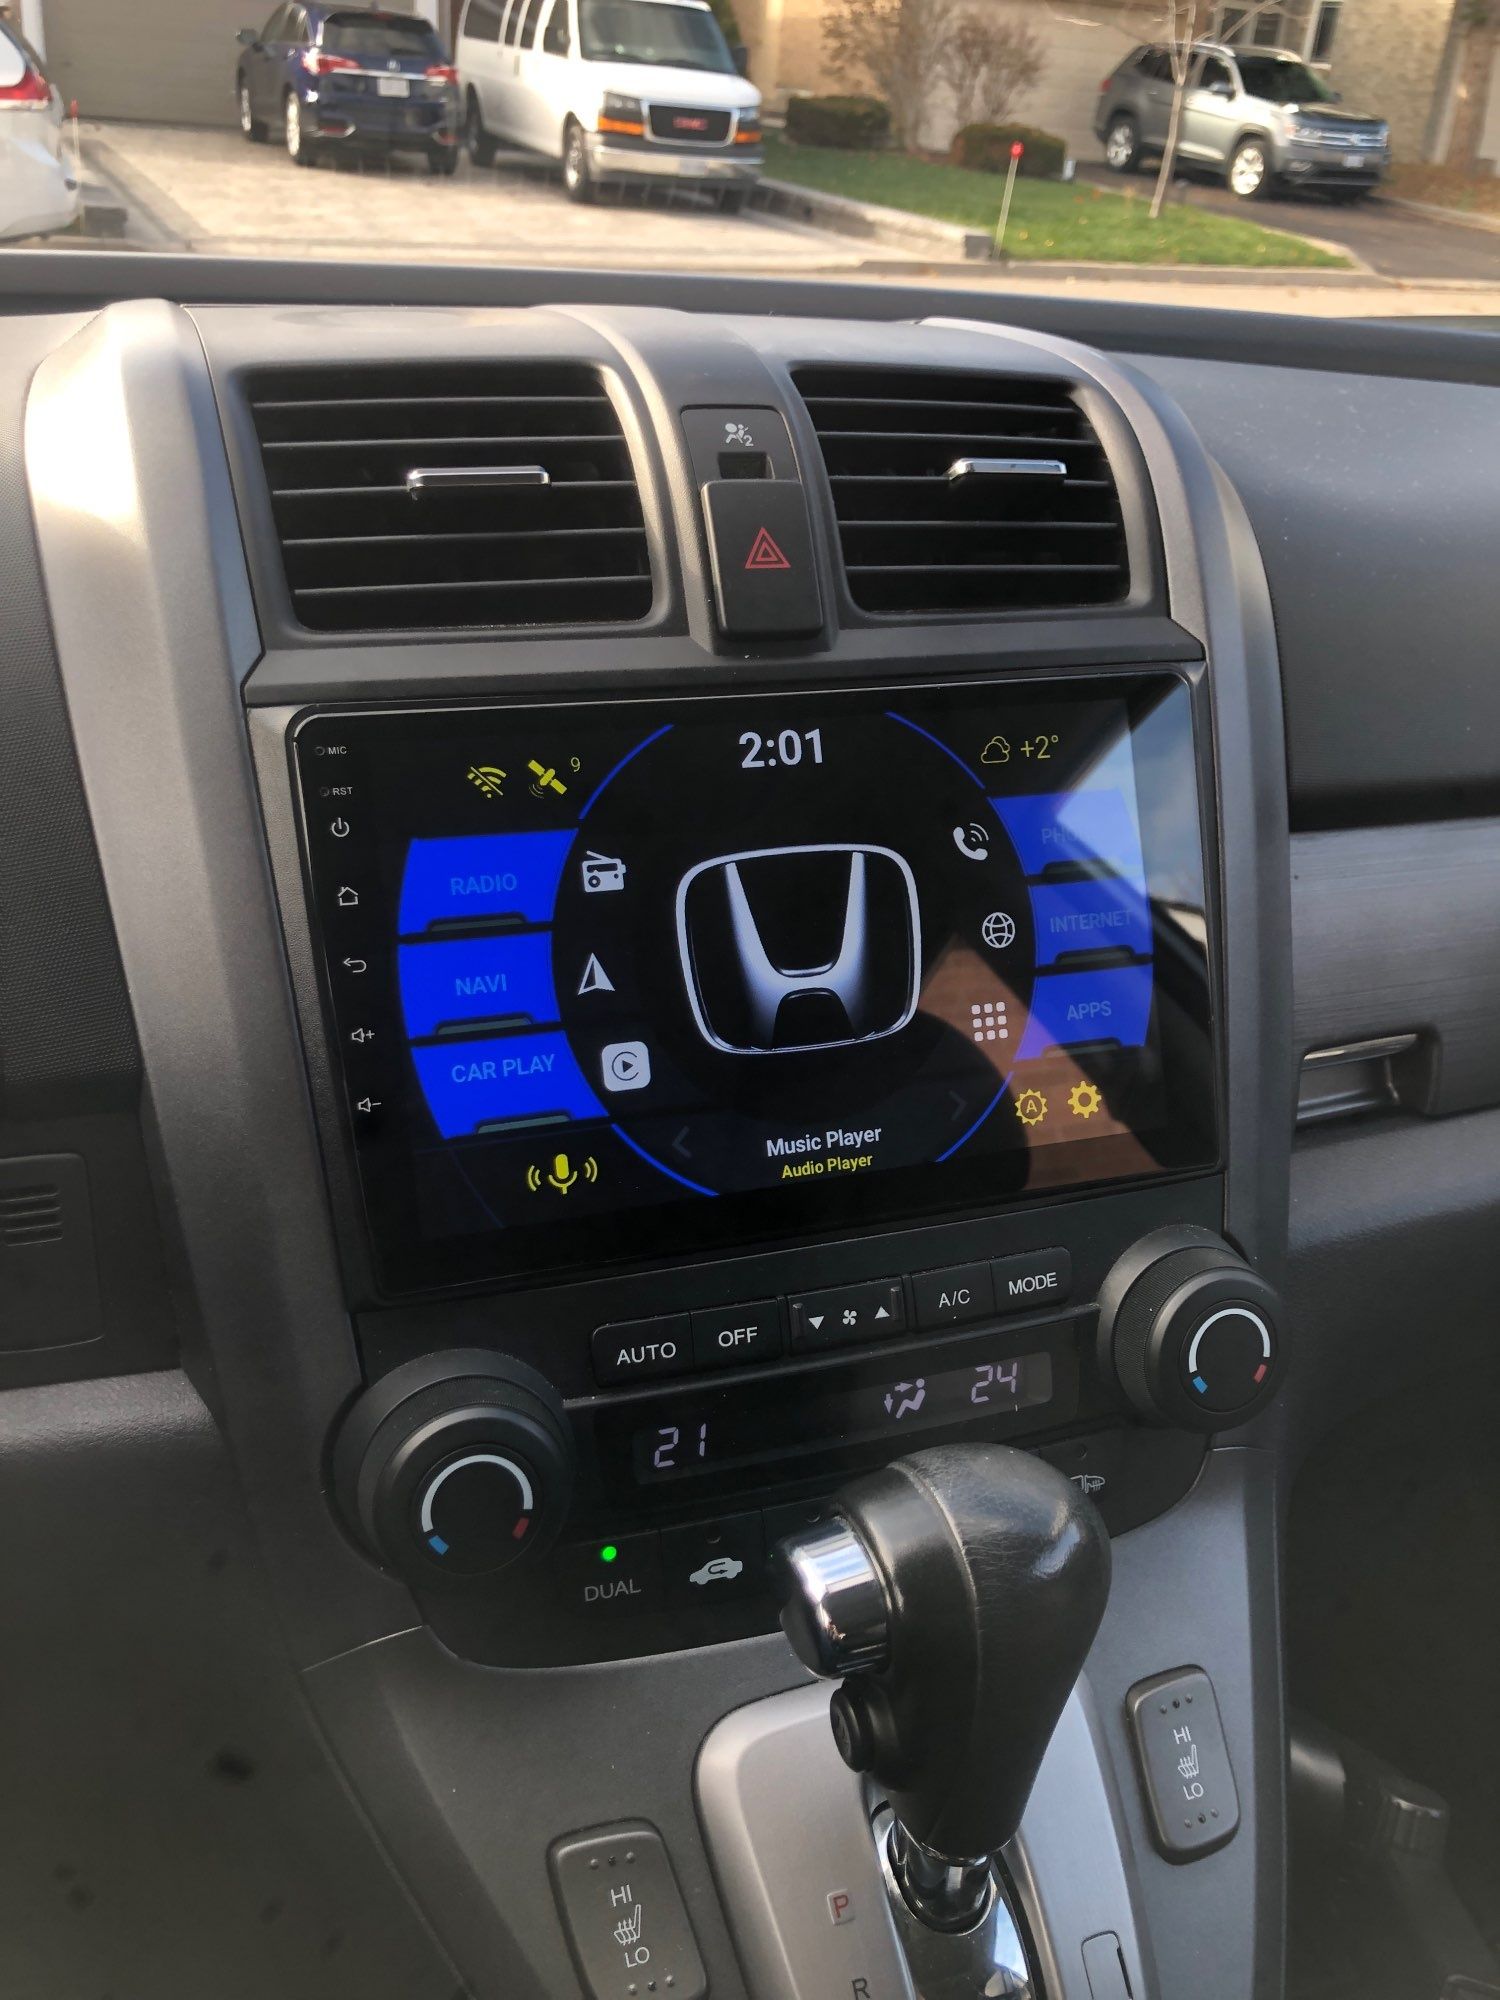 Автомагнитола Honda CRV 2006-2012 на android, USB, bluetooth, wifi